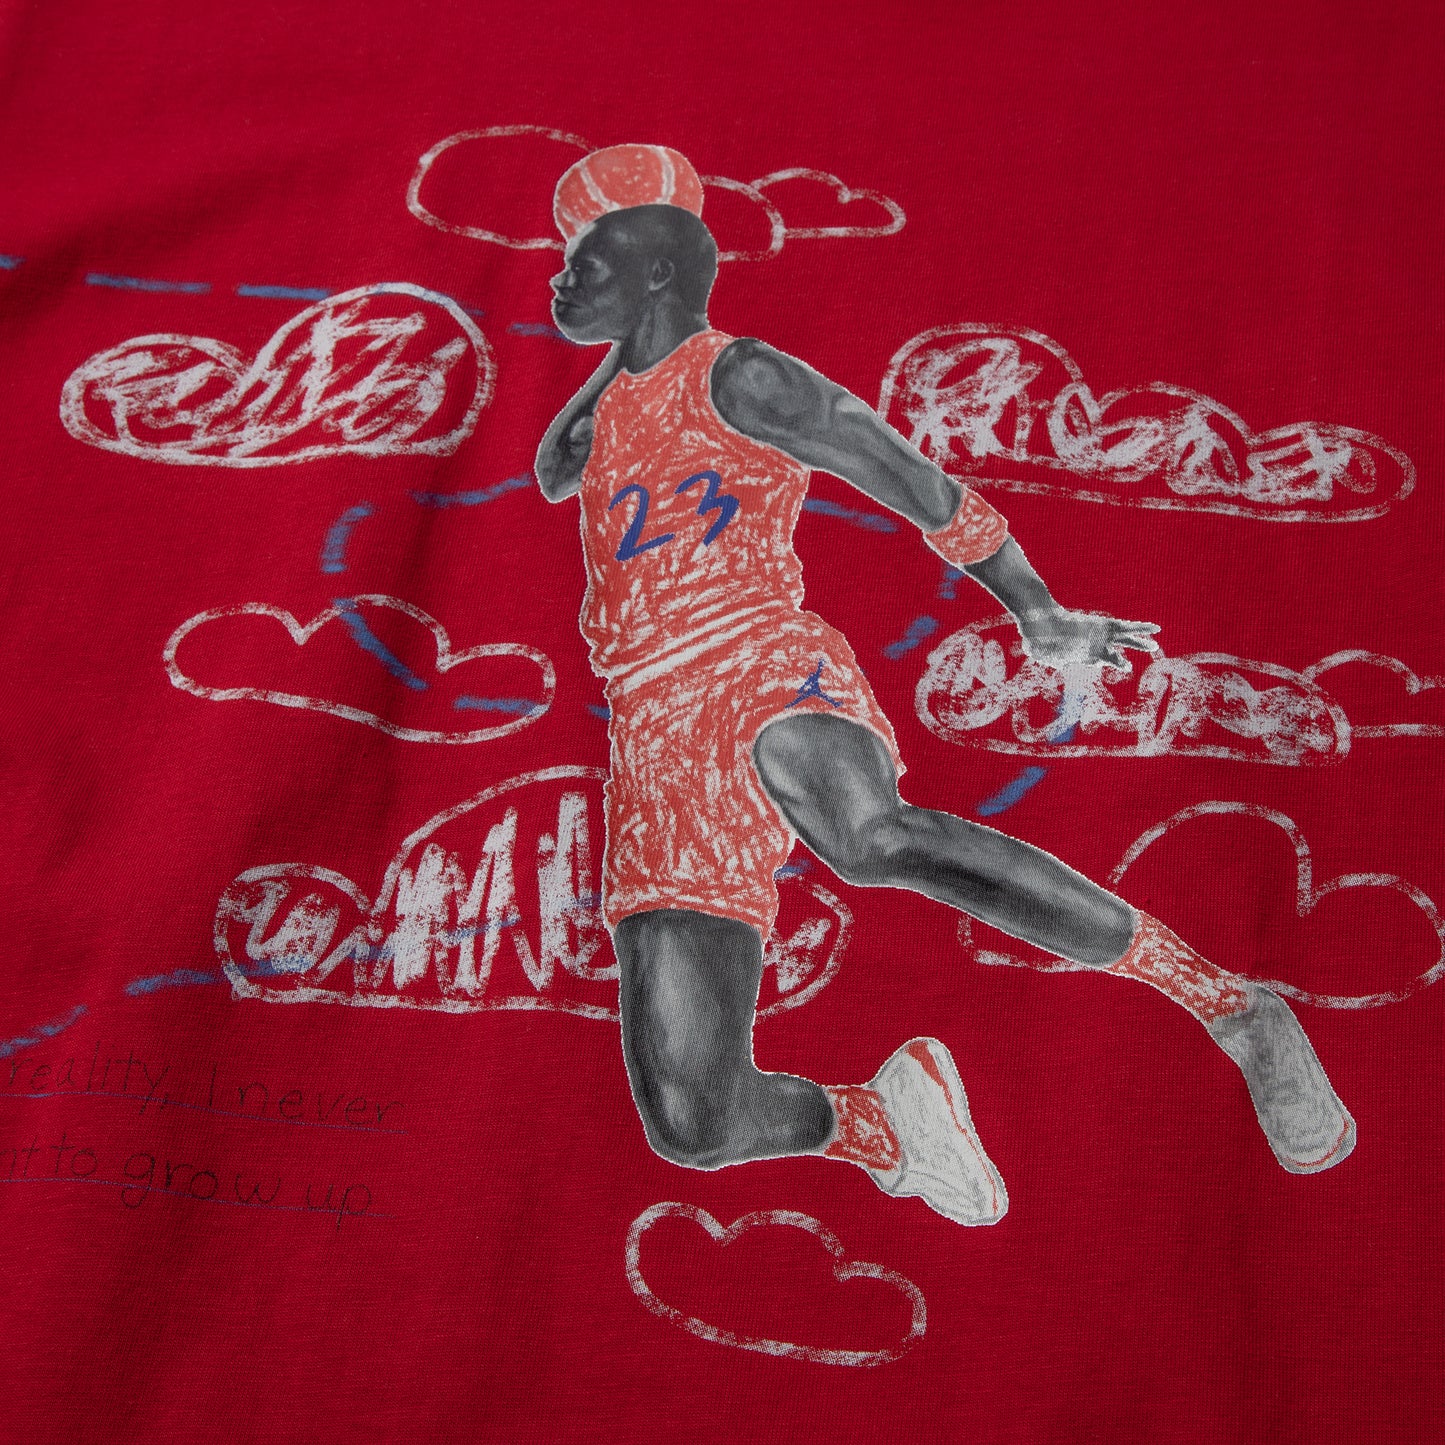 Nike Womens Jordan Artist Series T-shirt (Gym Red)